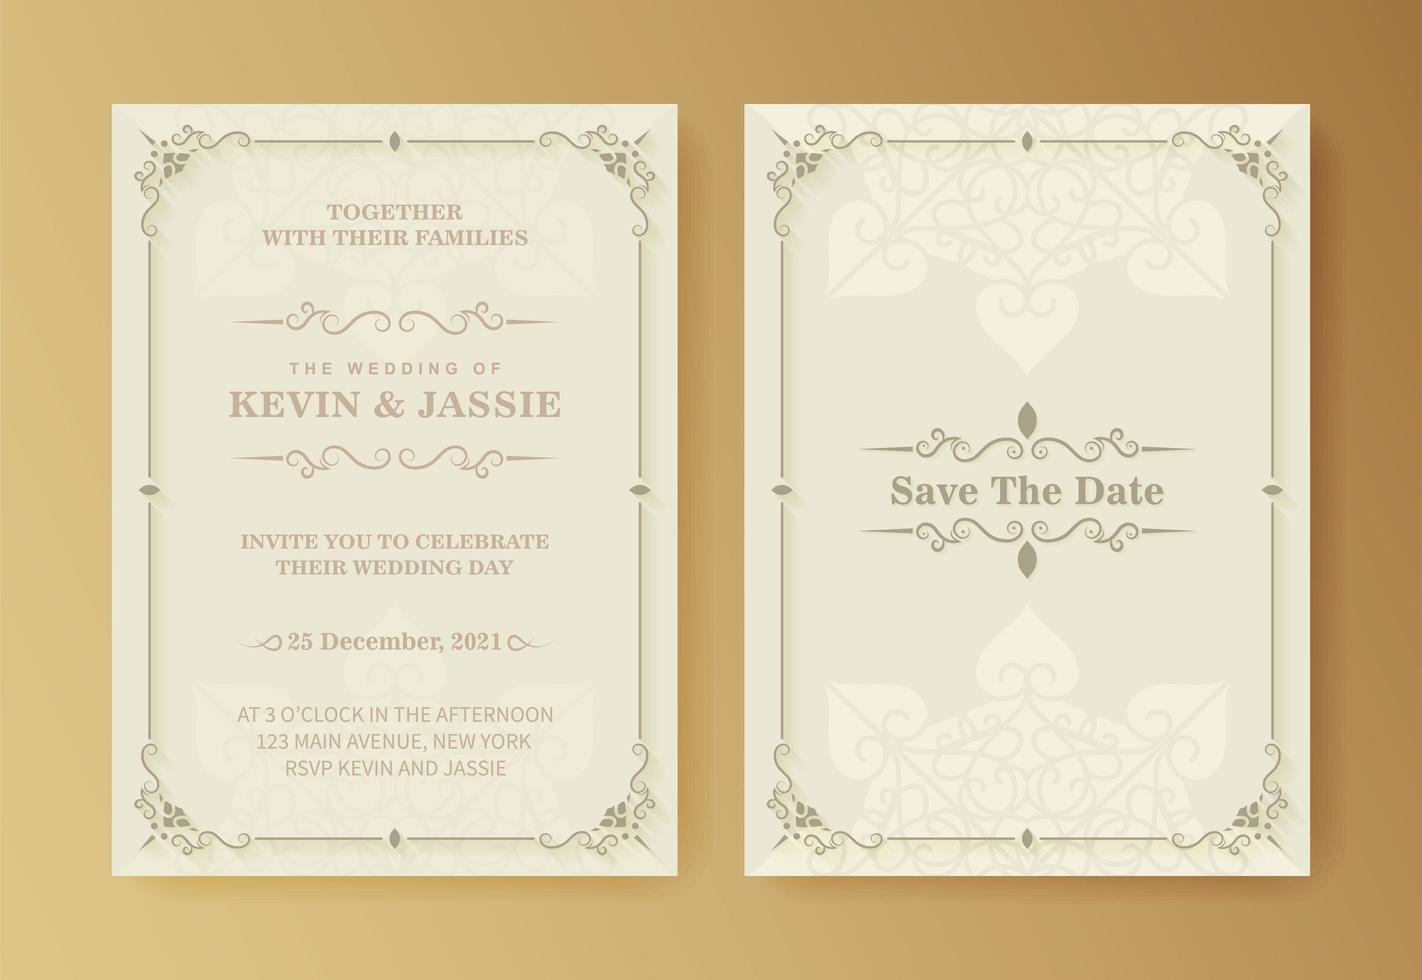 Retro wedding invitation on white background vector